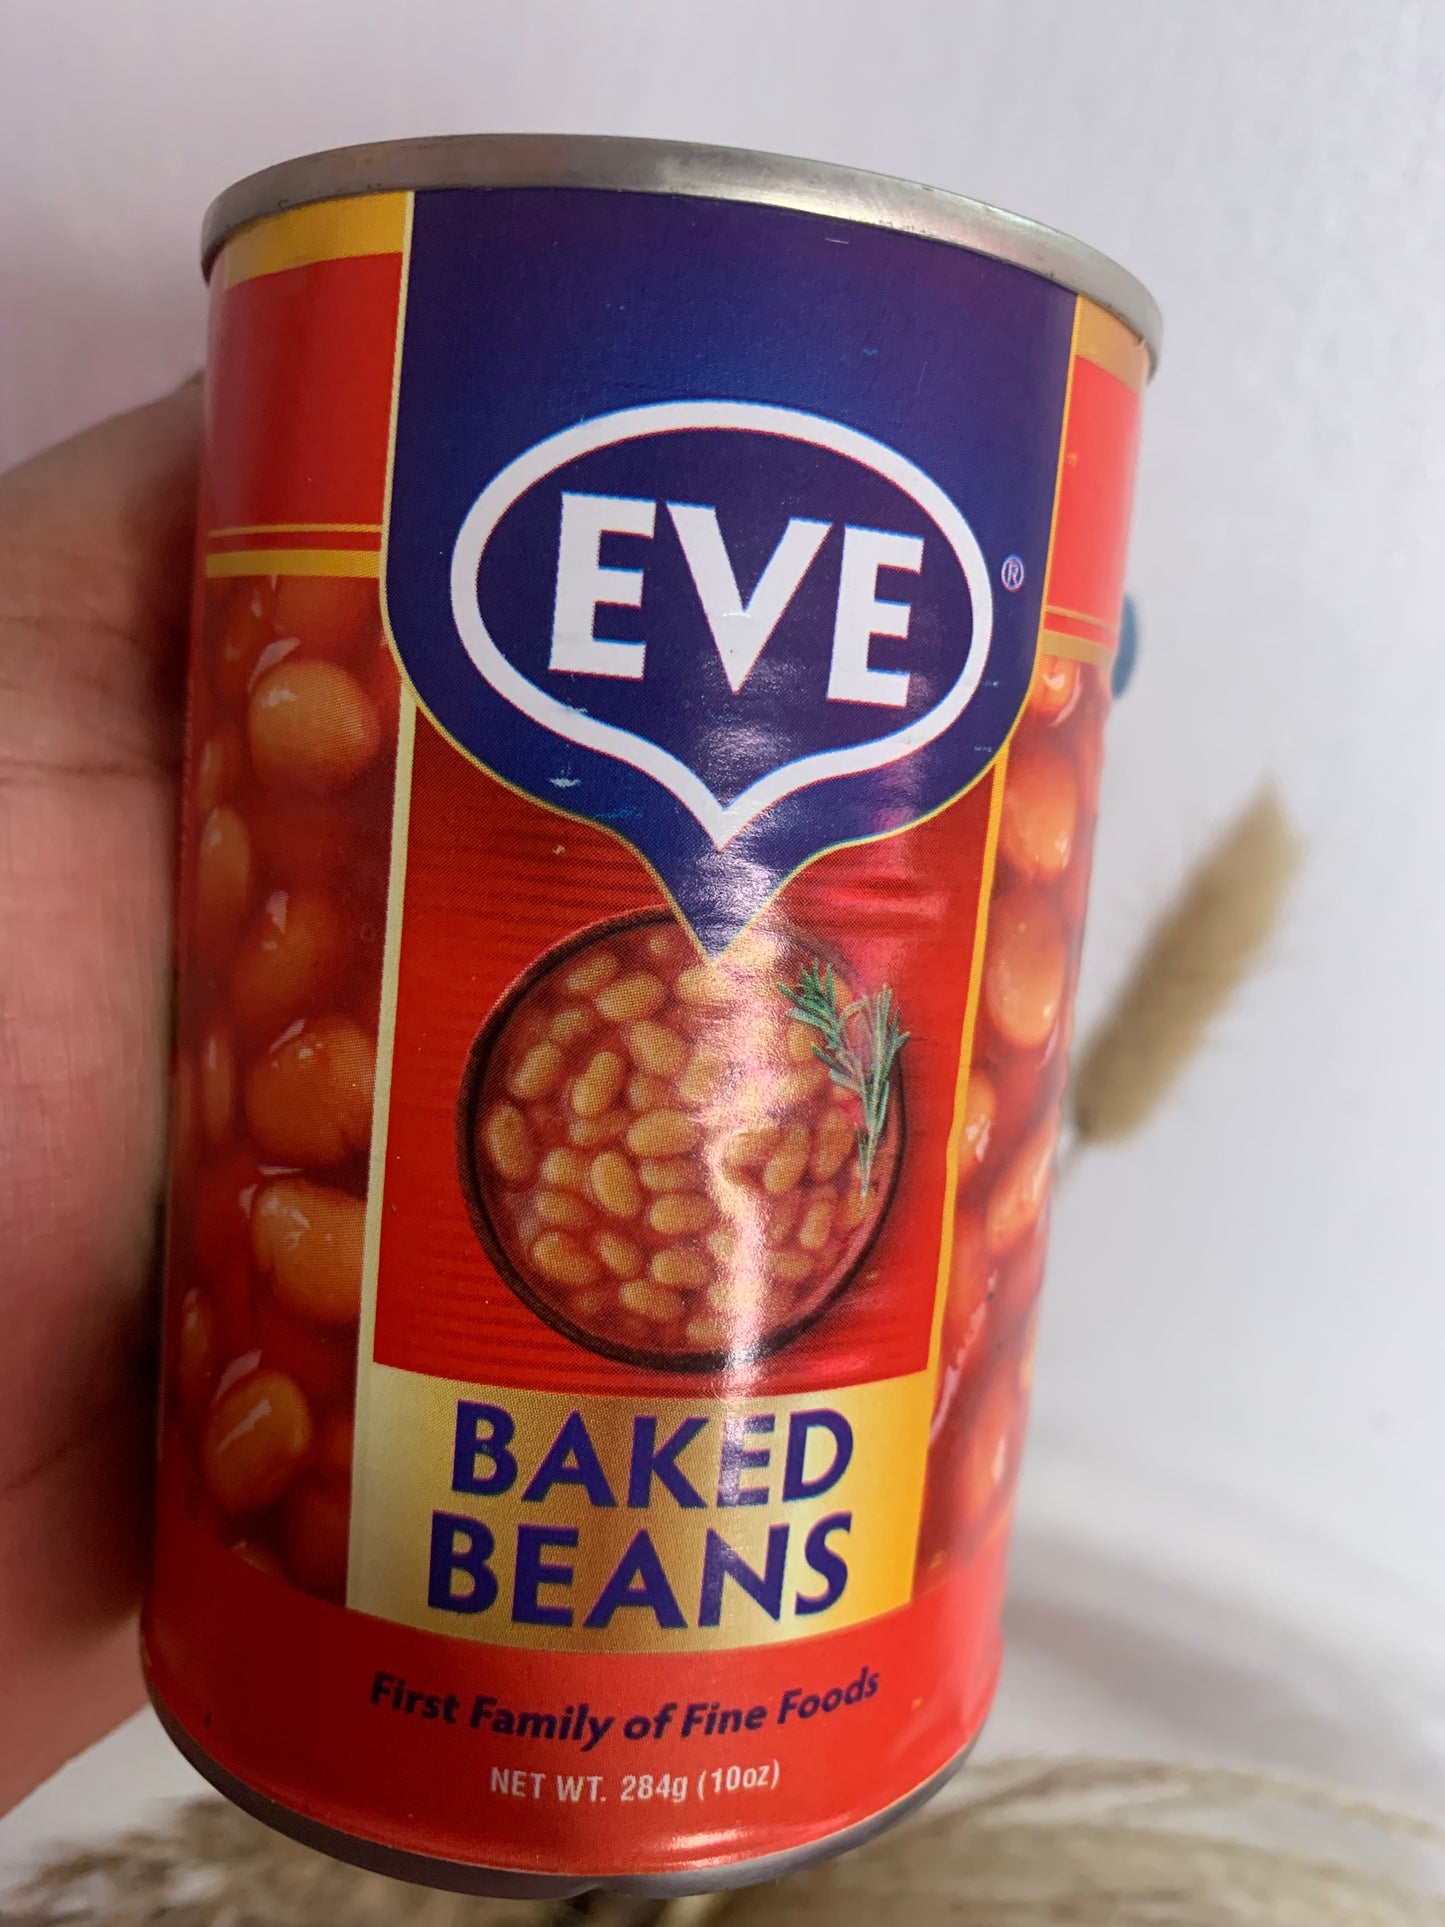 Baked beans (EVE)